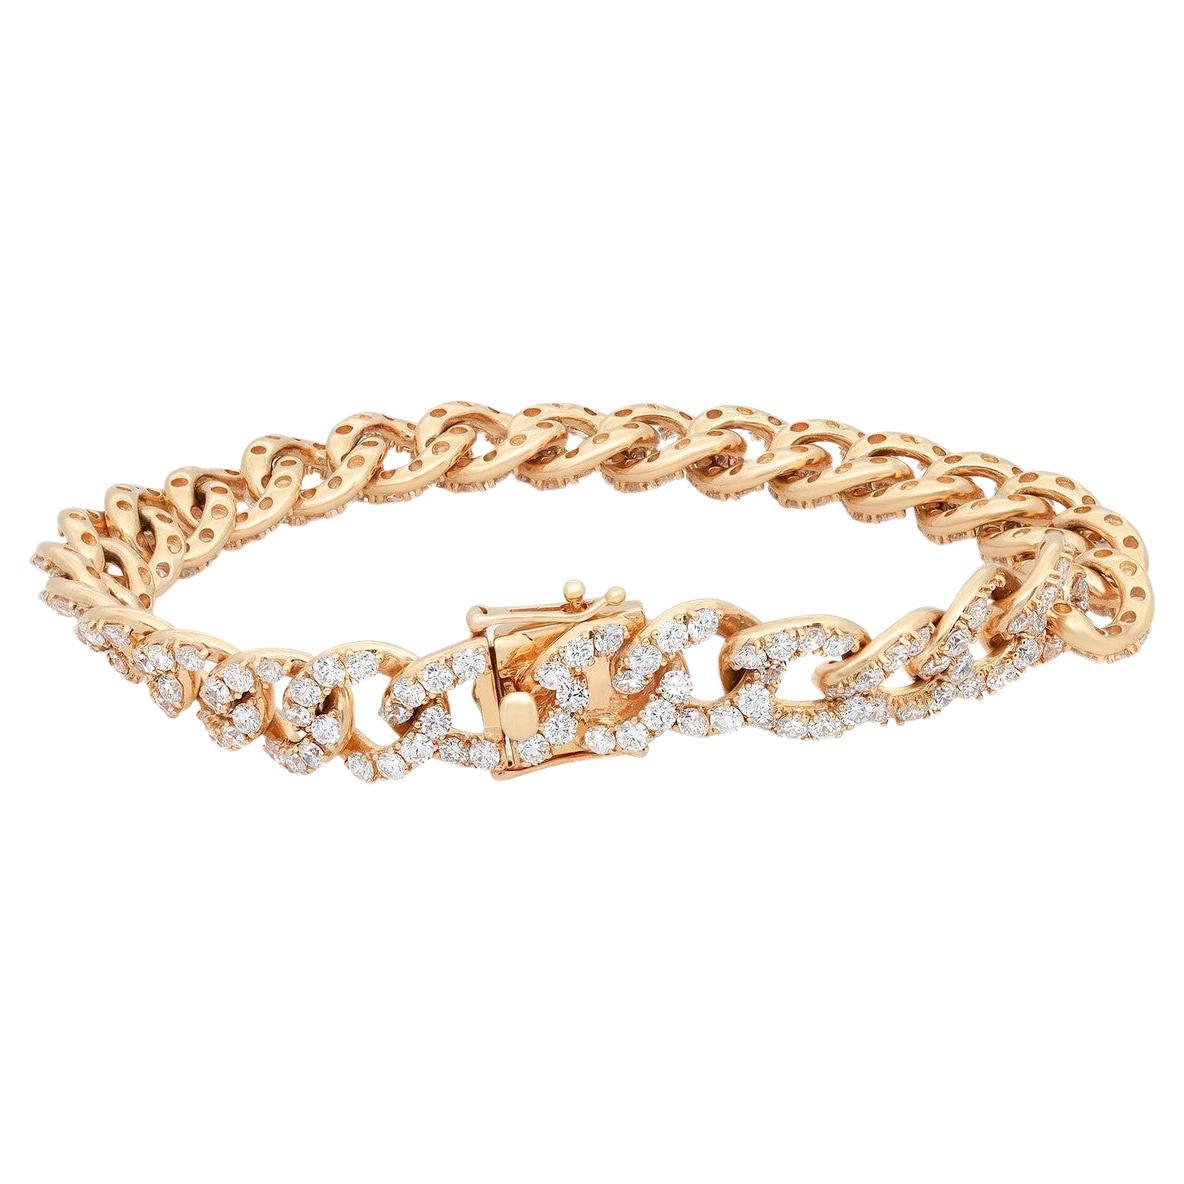 7.65 Carat Diamond Chain Link Bracelet 18k Yellow Gold